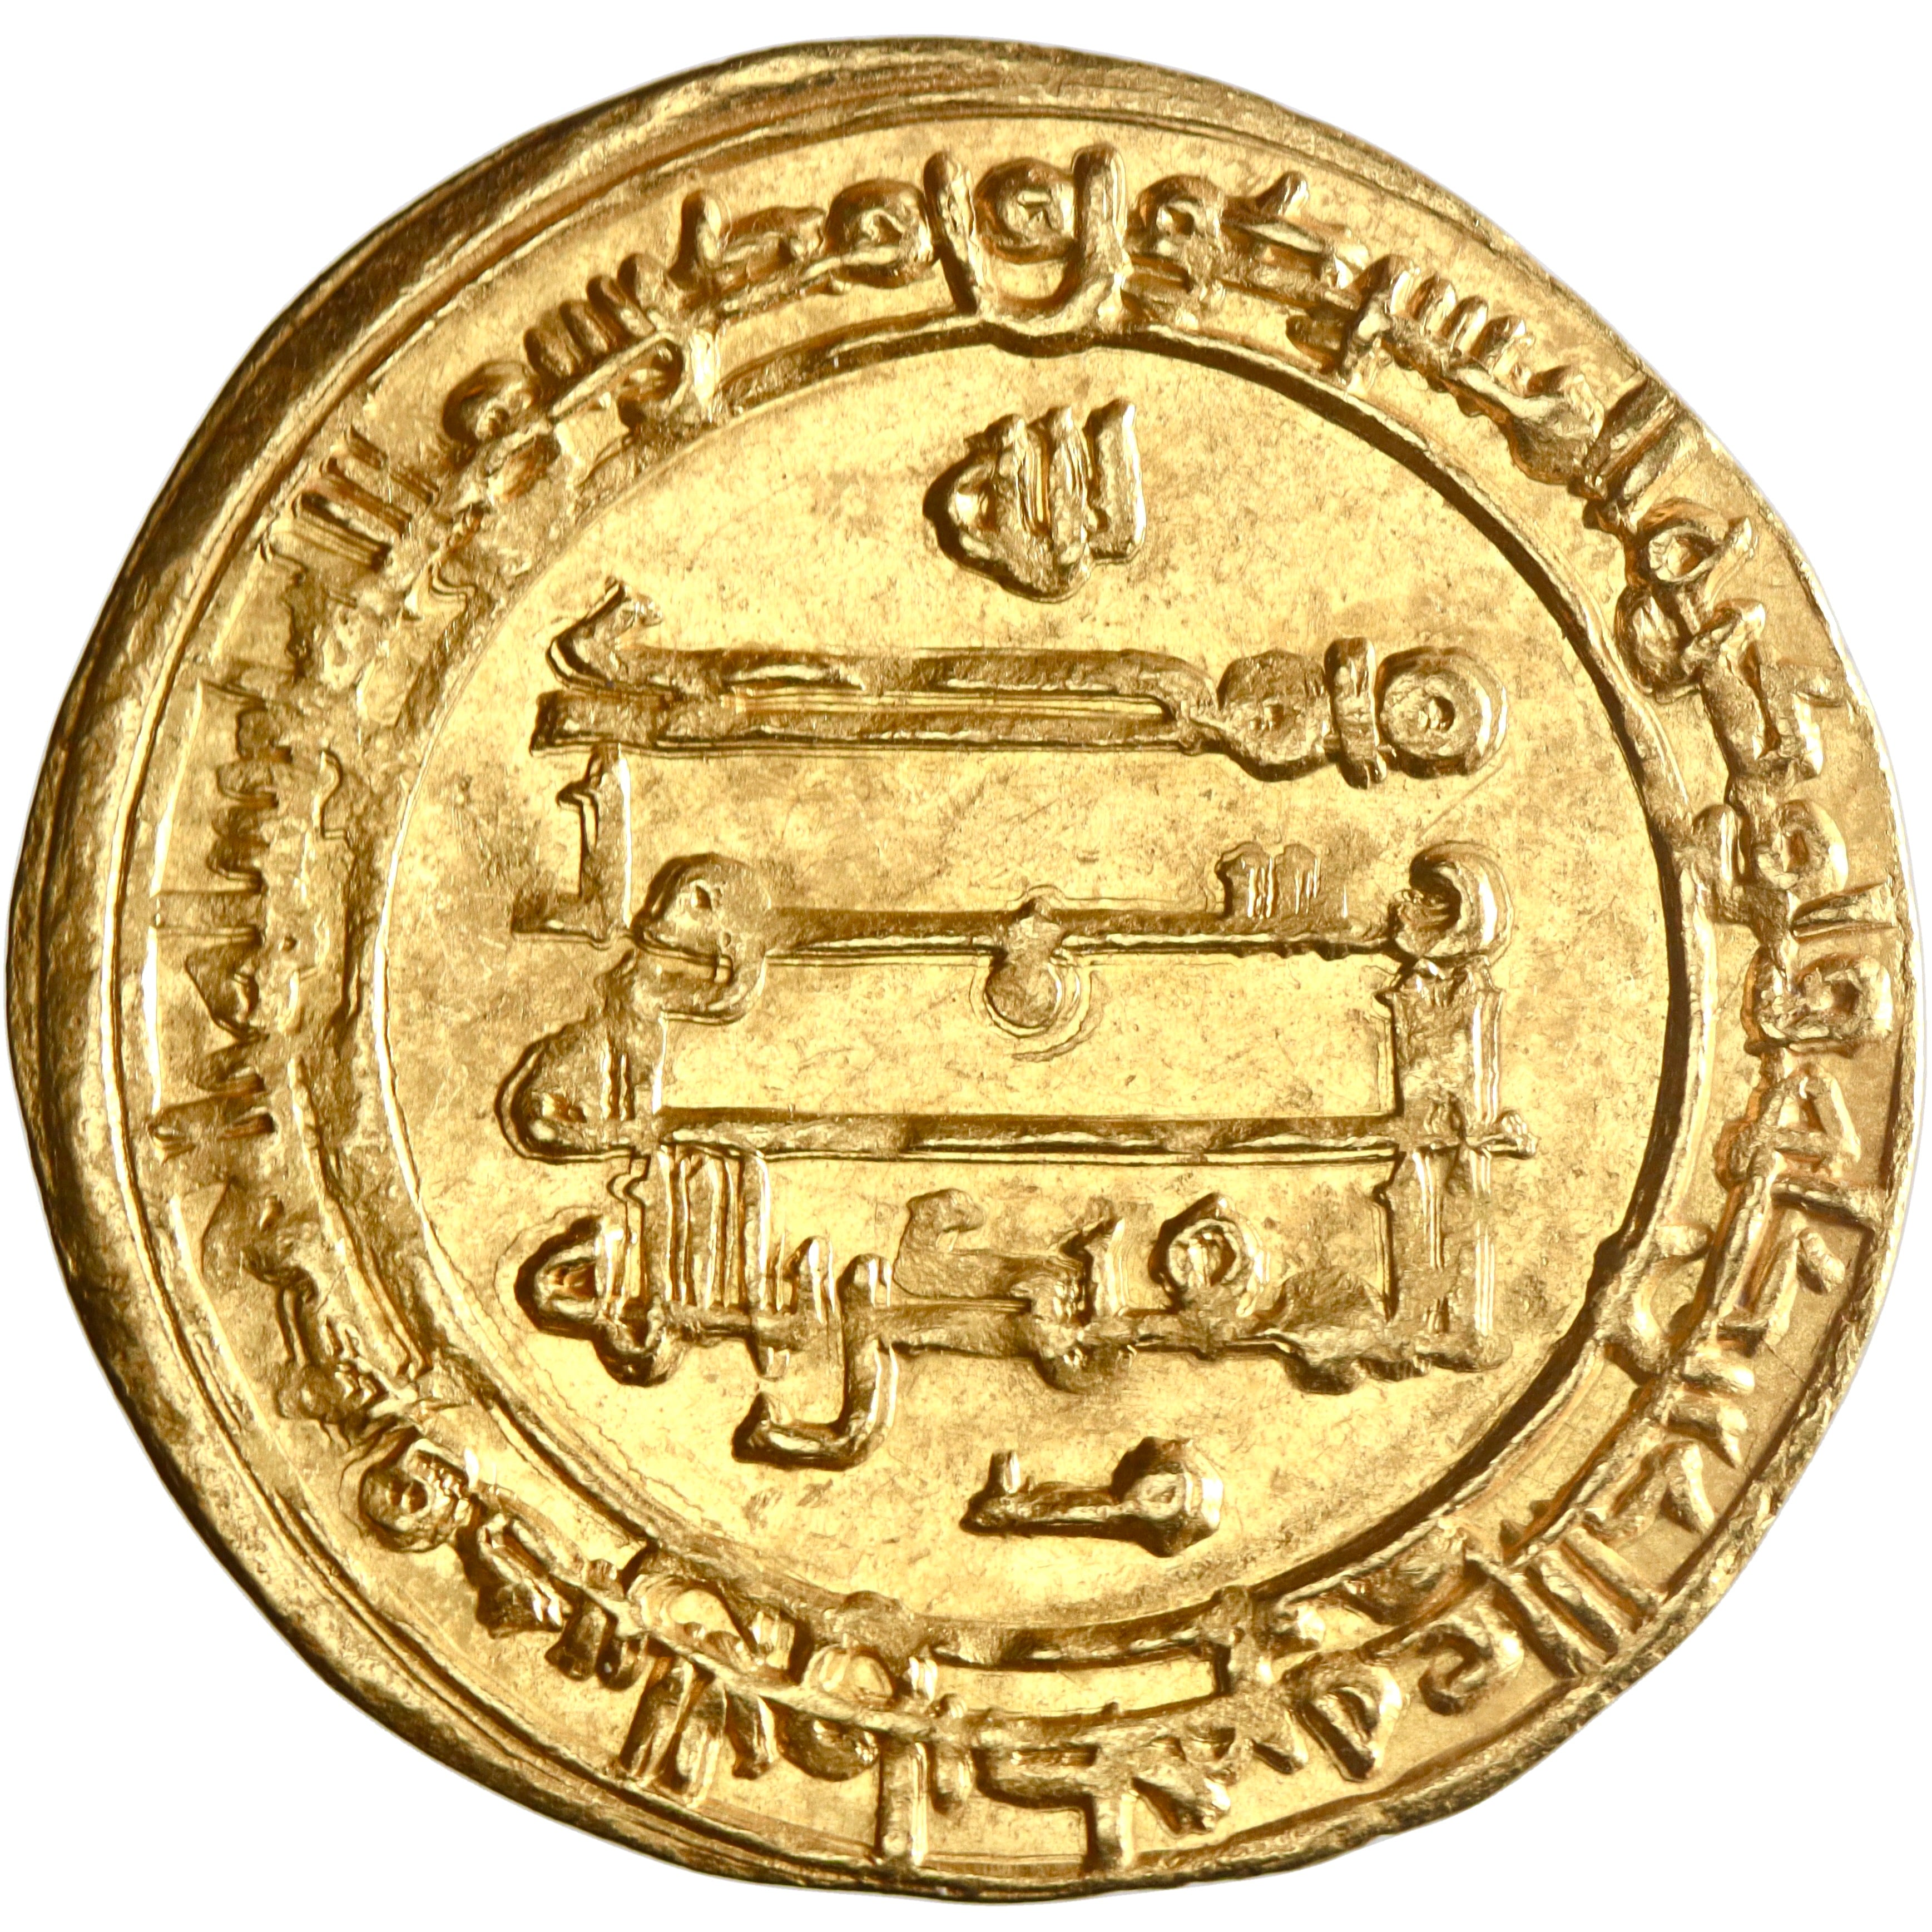 Abbasid, al-Muqtadir, gold dinar, Madinat al-Salam (Baghdad) mint, AH 305, citing Abu al-'Abbas